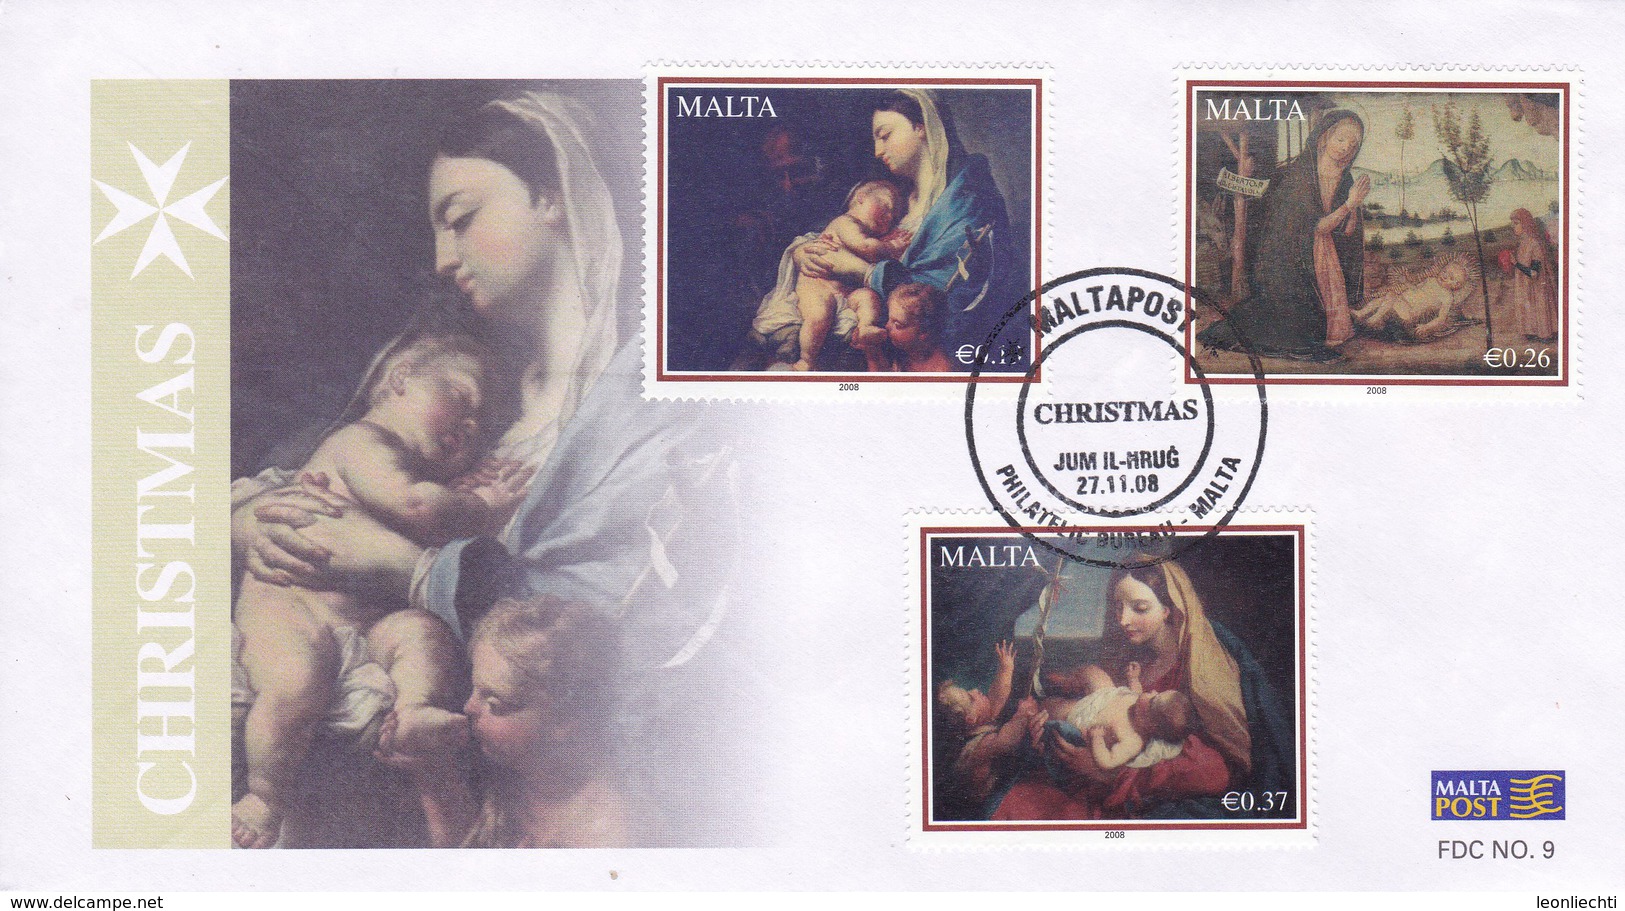 Malta, FDC N°. 9 . 27.11.08. Christmas - Christentum